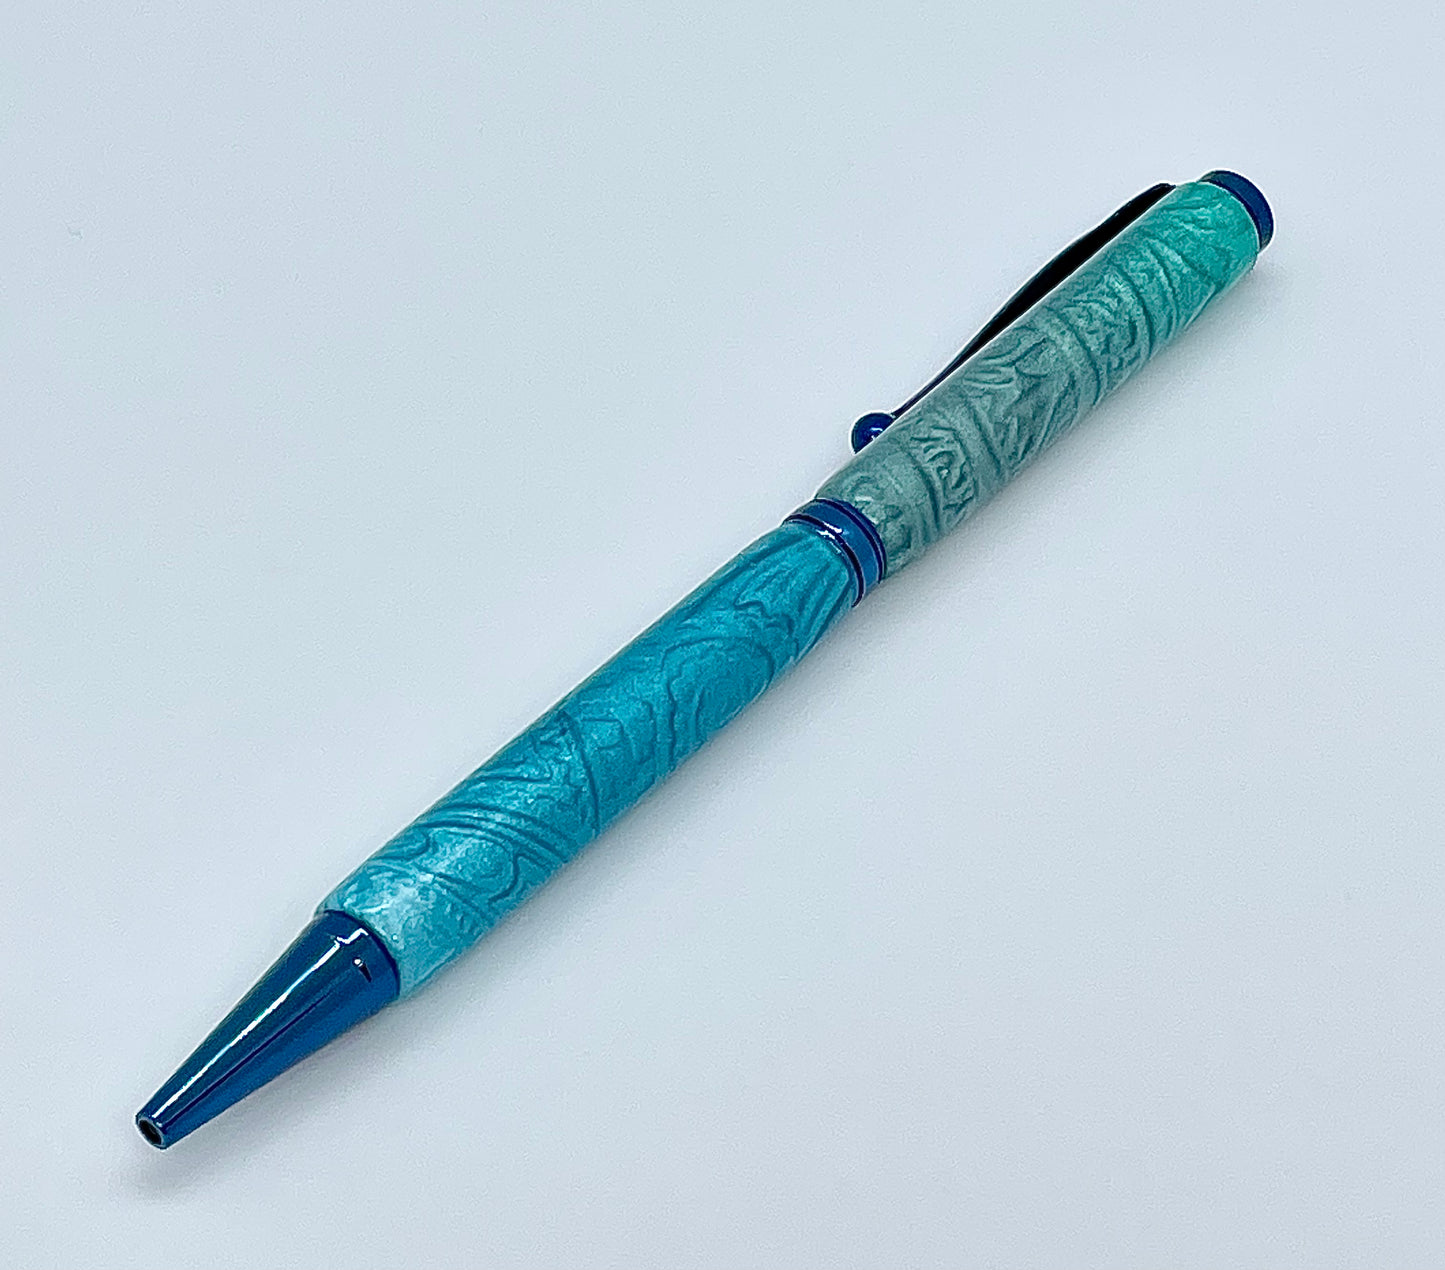 Slimline Slim Twist Collectible Ballpoint Pen; Blue to the sky!